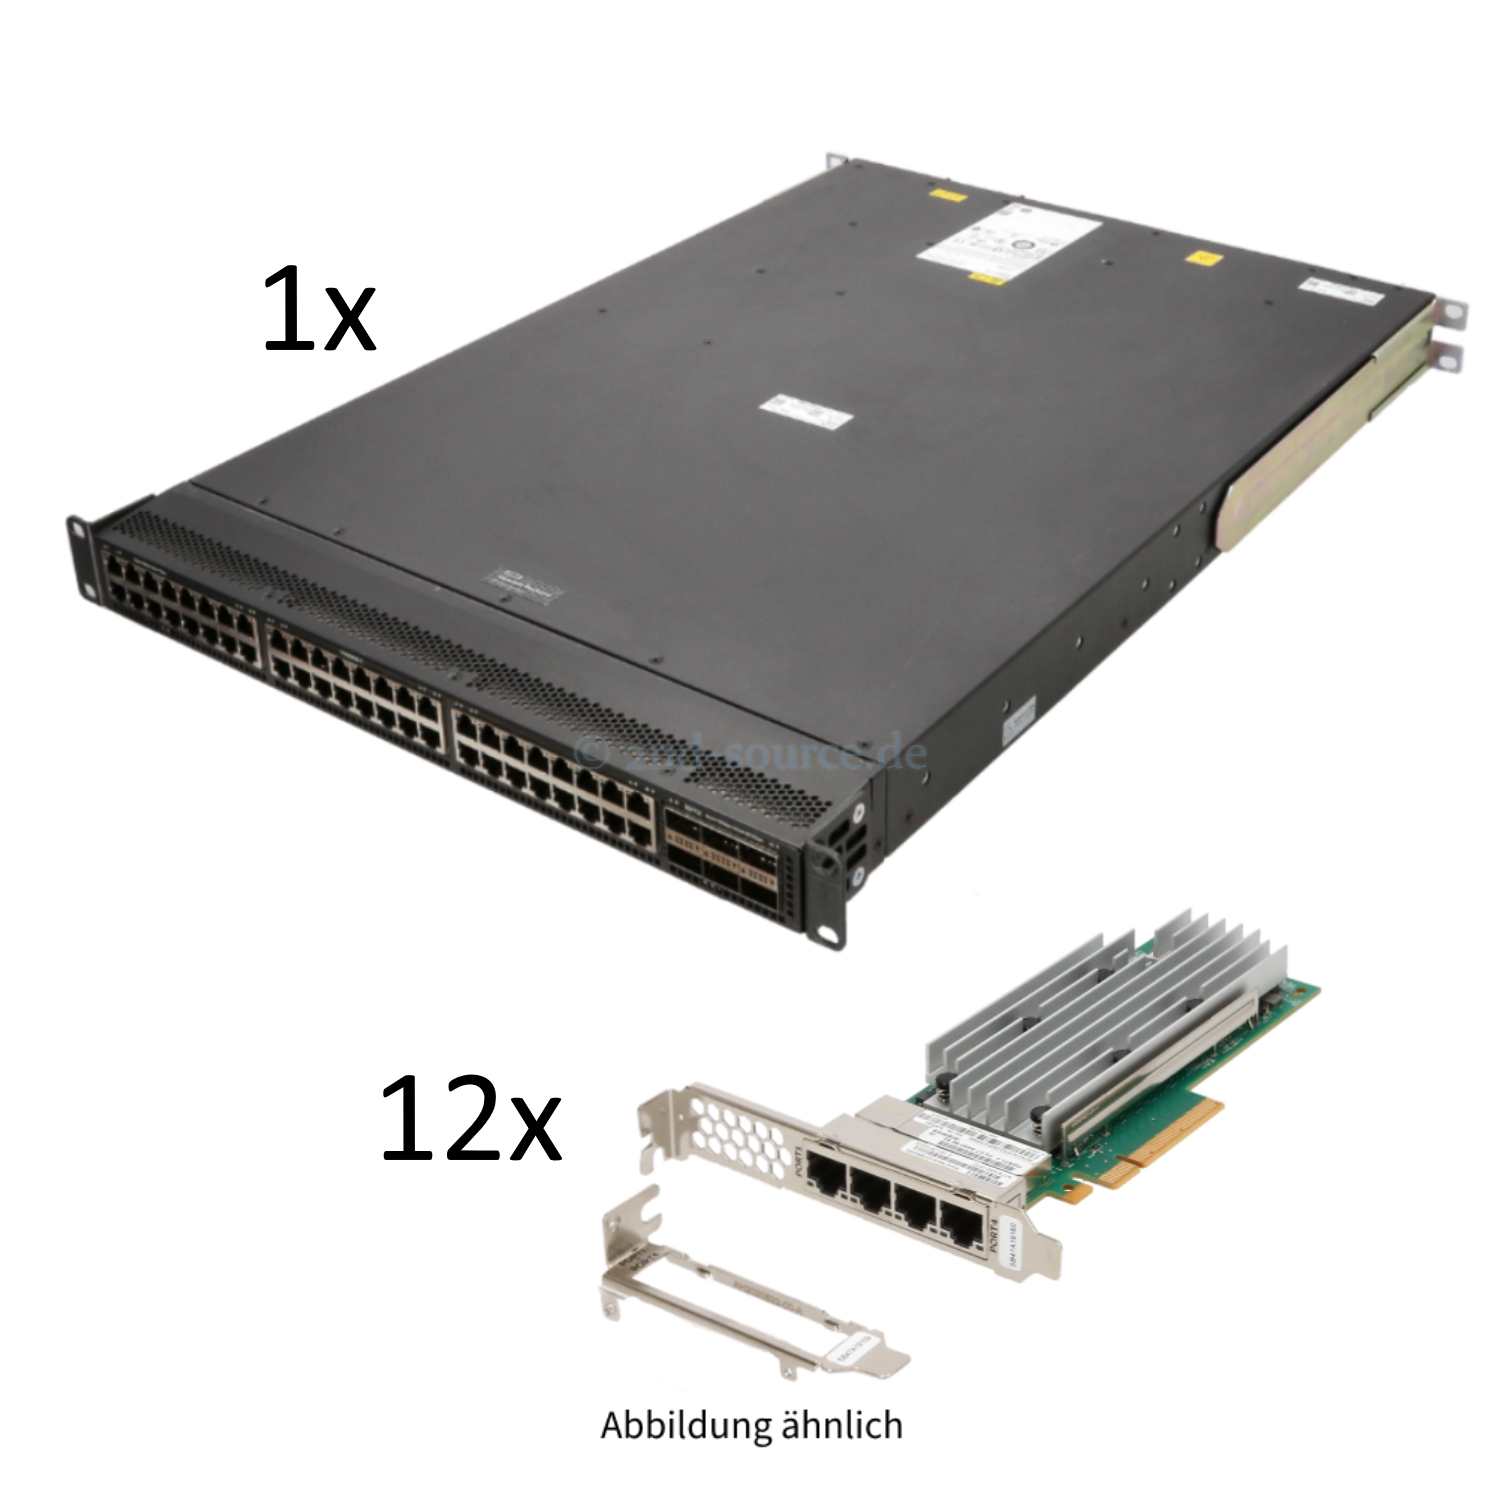 Starterkit "XXL" 1x HPE FlexFabric 5940 48x 10GBase-T 6x QSFP28 Front to Back Managed Switch 2x PSU und 12x QLogic QL41134 4x 10GBase-T PCIe Server Ethernet Adapter